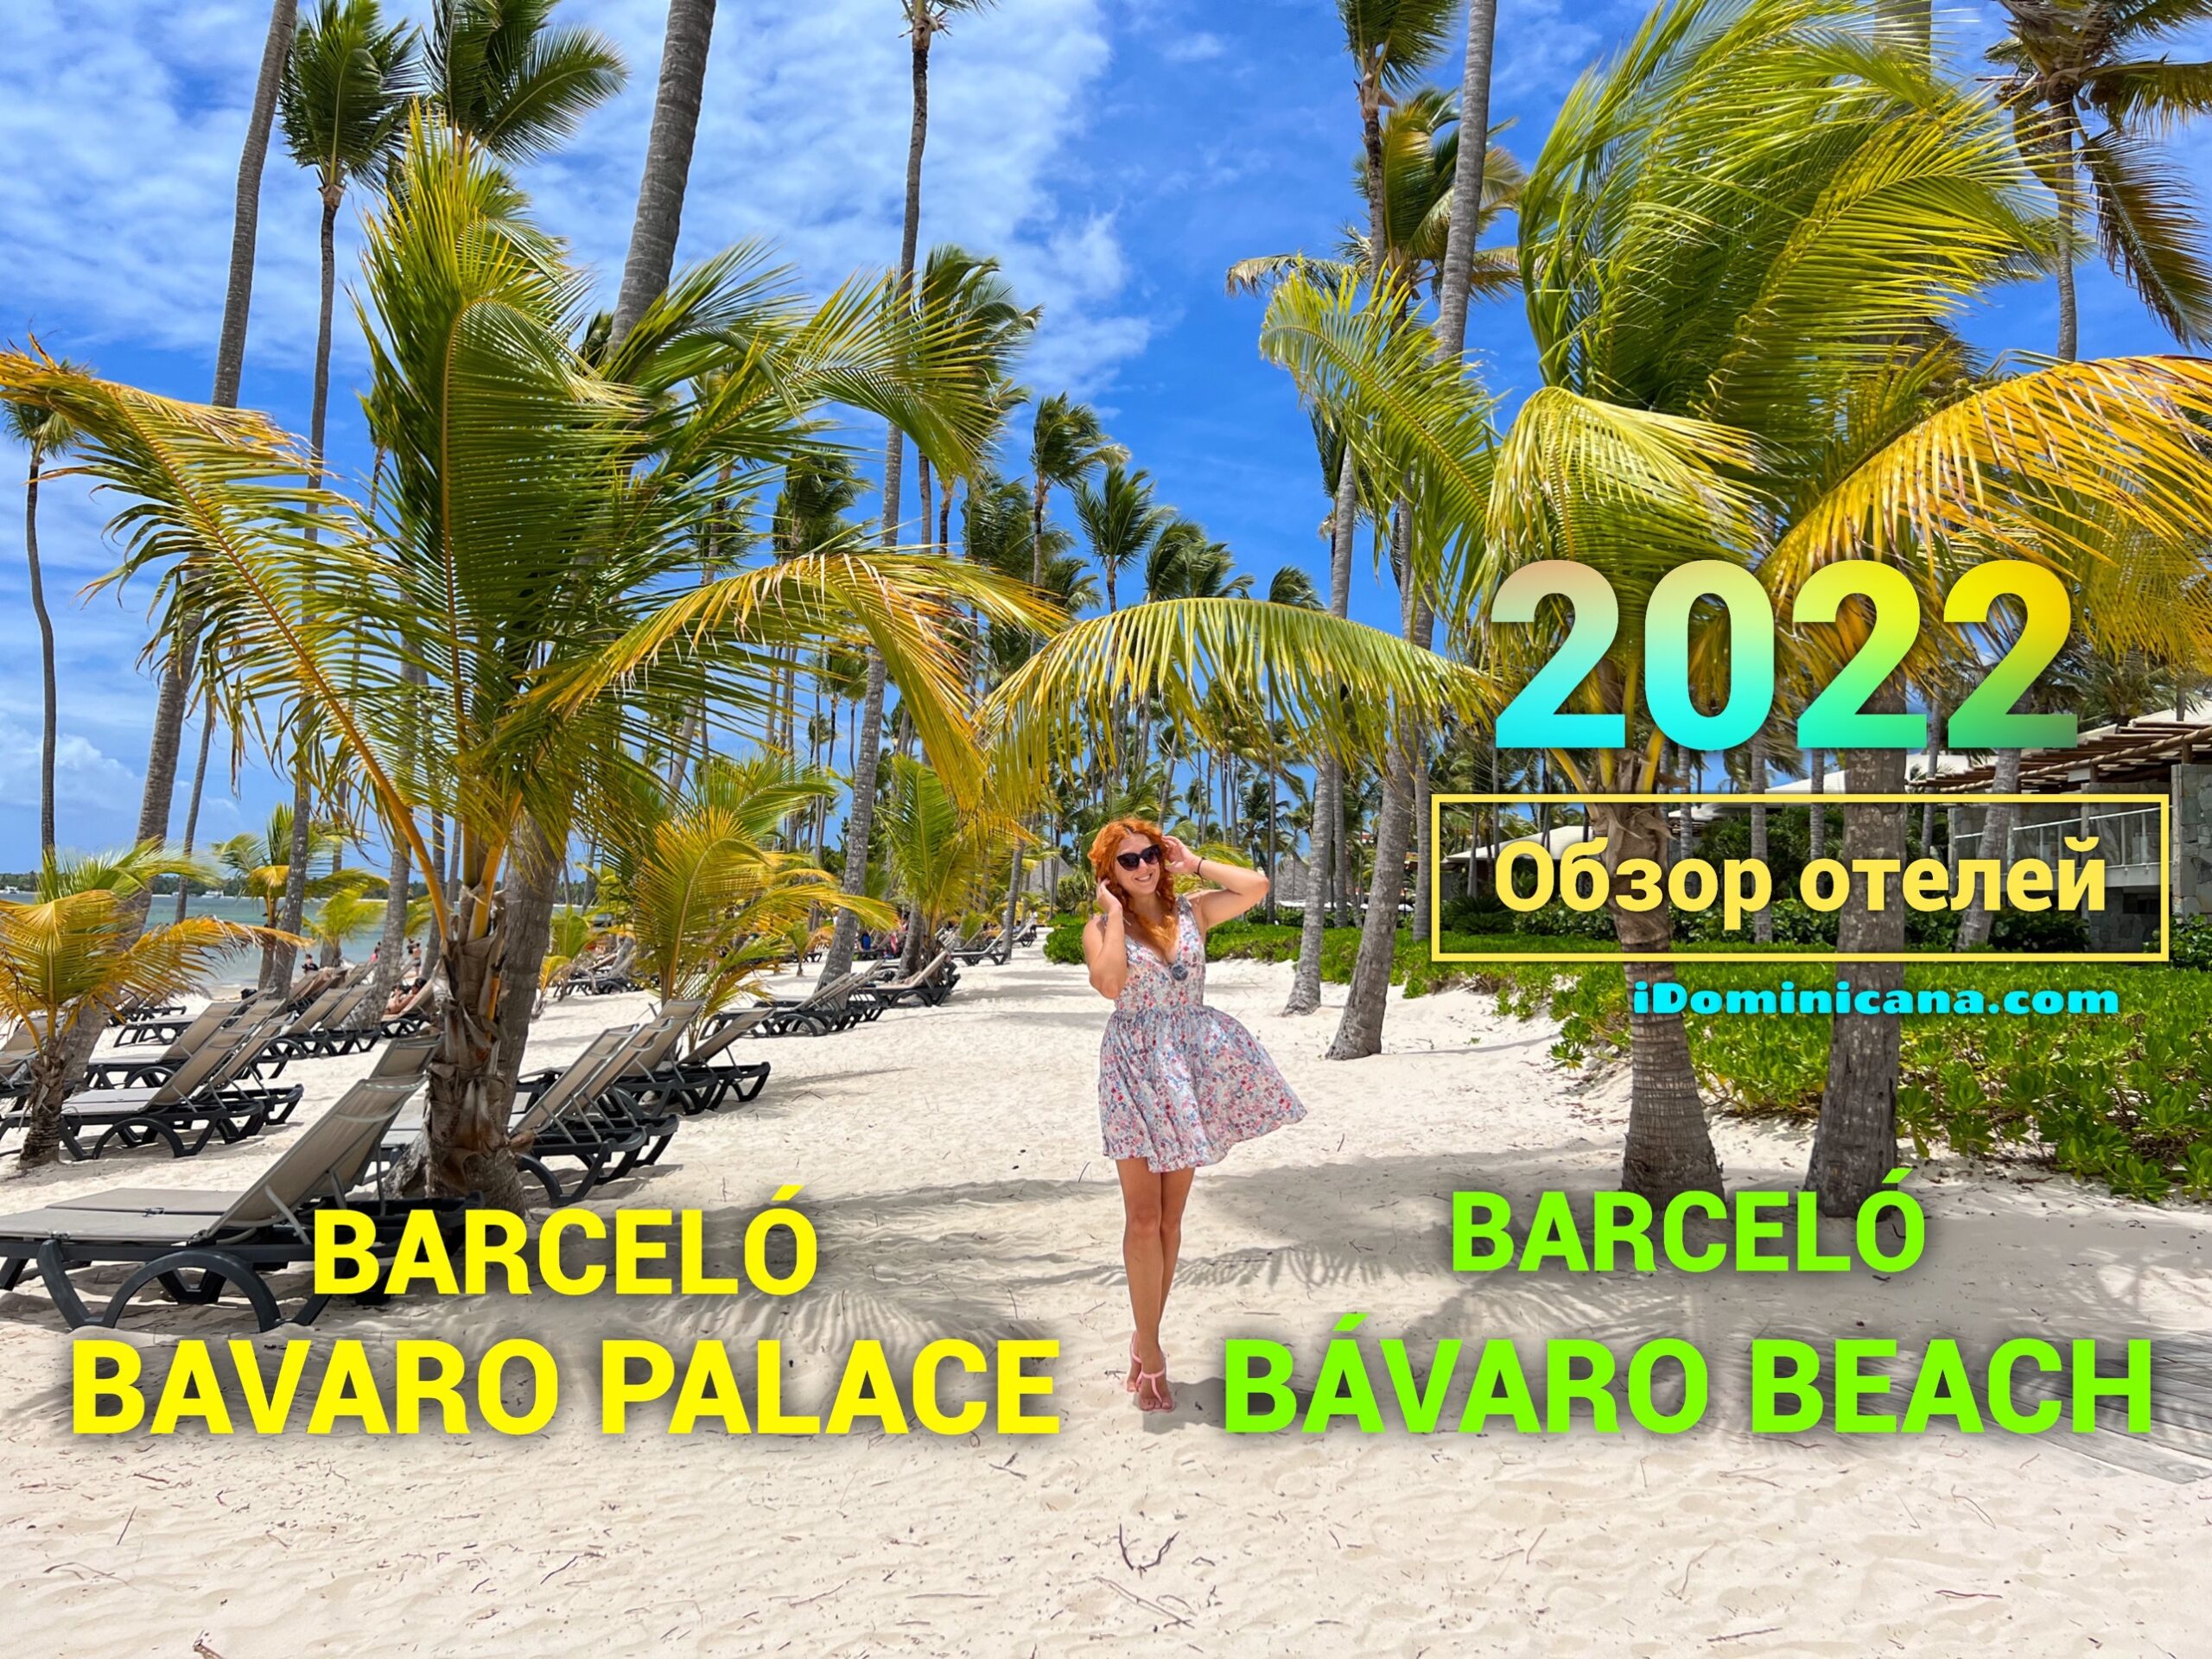 Обзор отелей Barcelo Bavaro beach, Barcelo Bavaro Palace 2022 - ВИДЕО